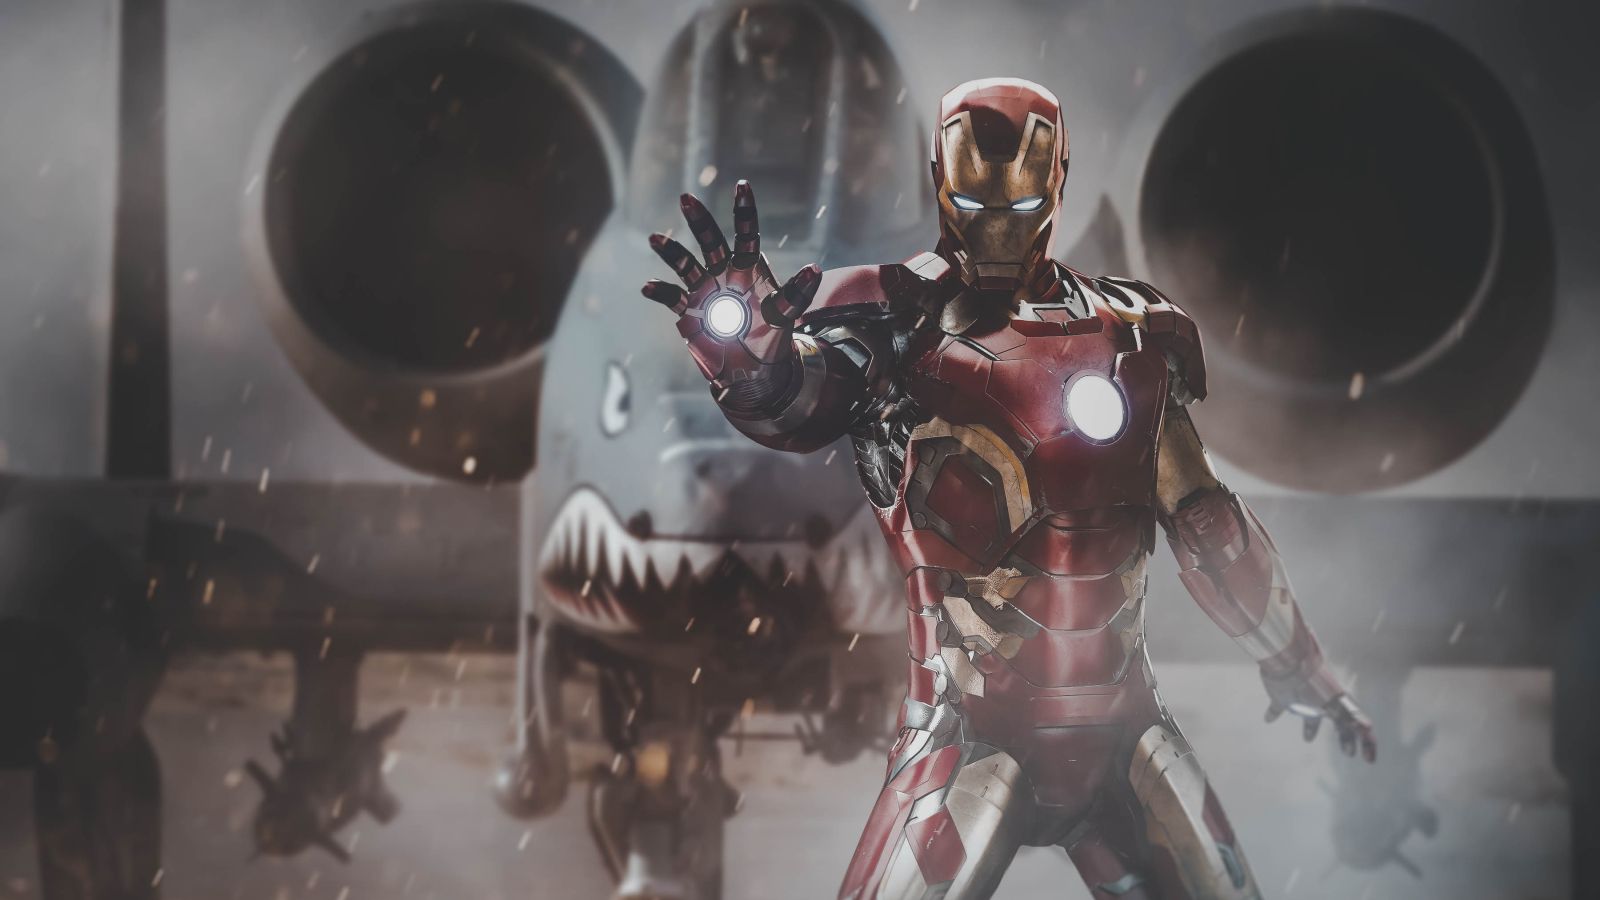 Iron Man Avengers Marvel Superhero wallpaper in 1600x900 resolution